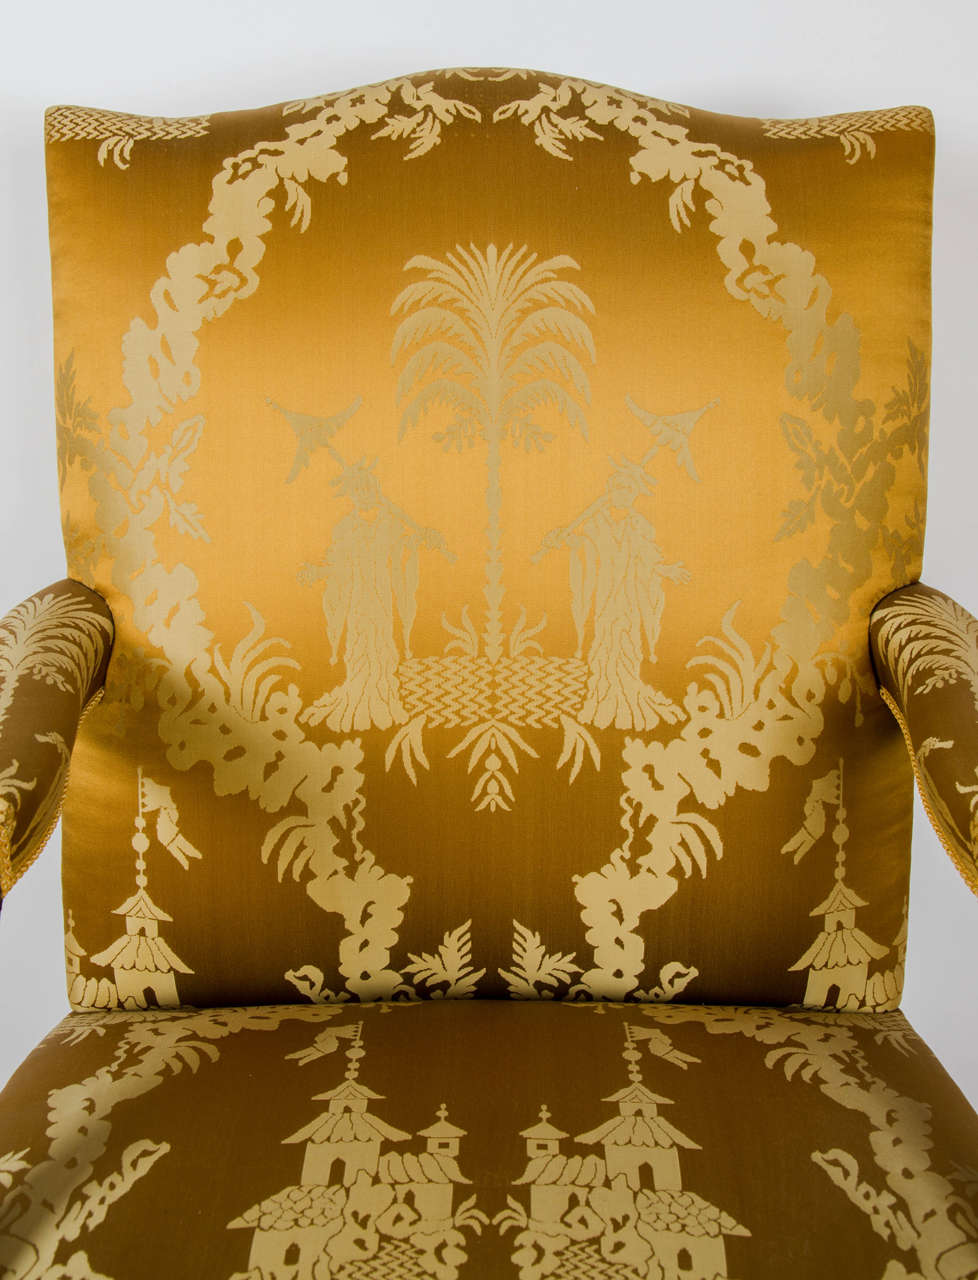 18th century chairs